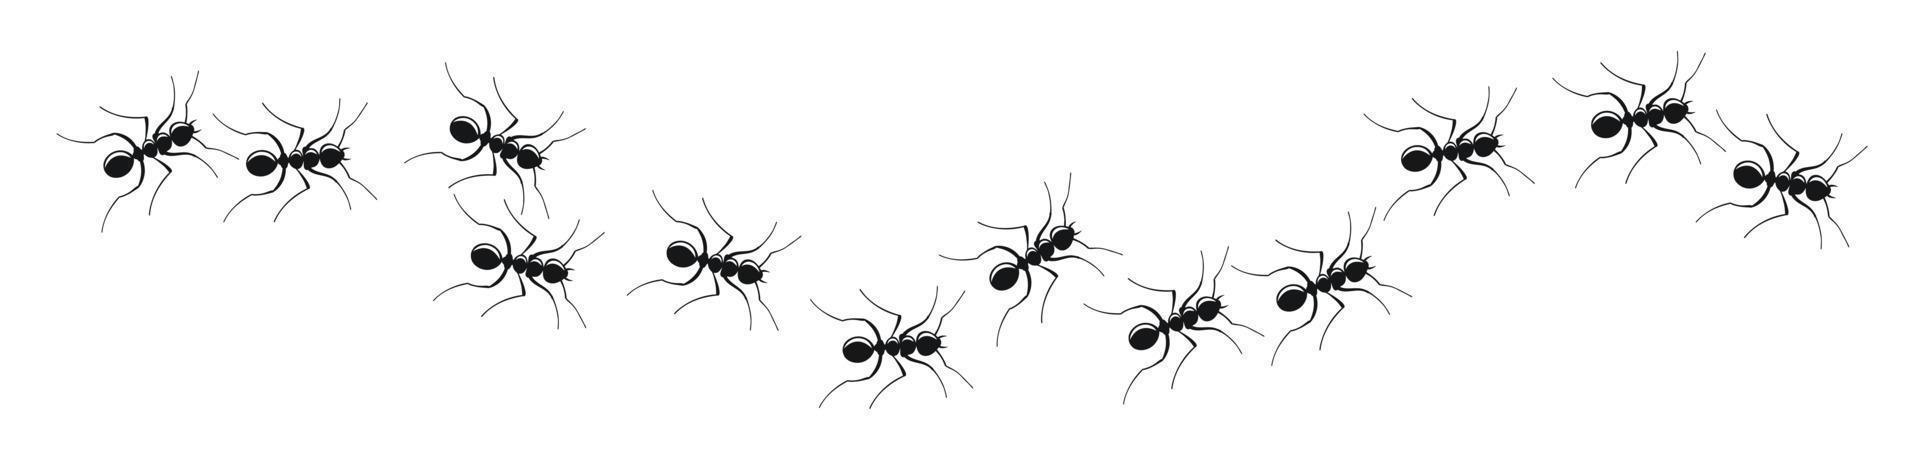 myr trail koloni på vit bakgrund vektor